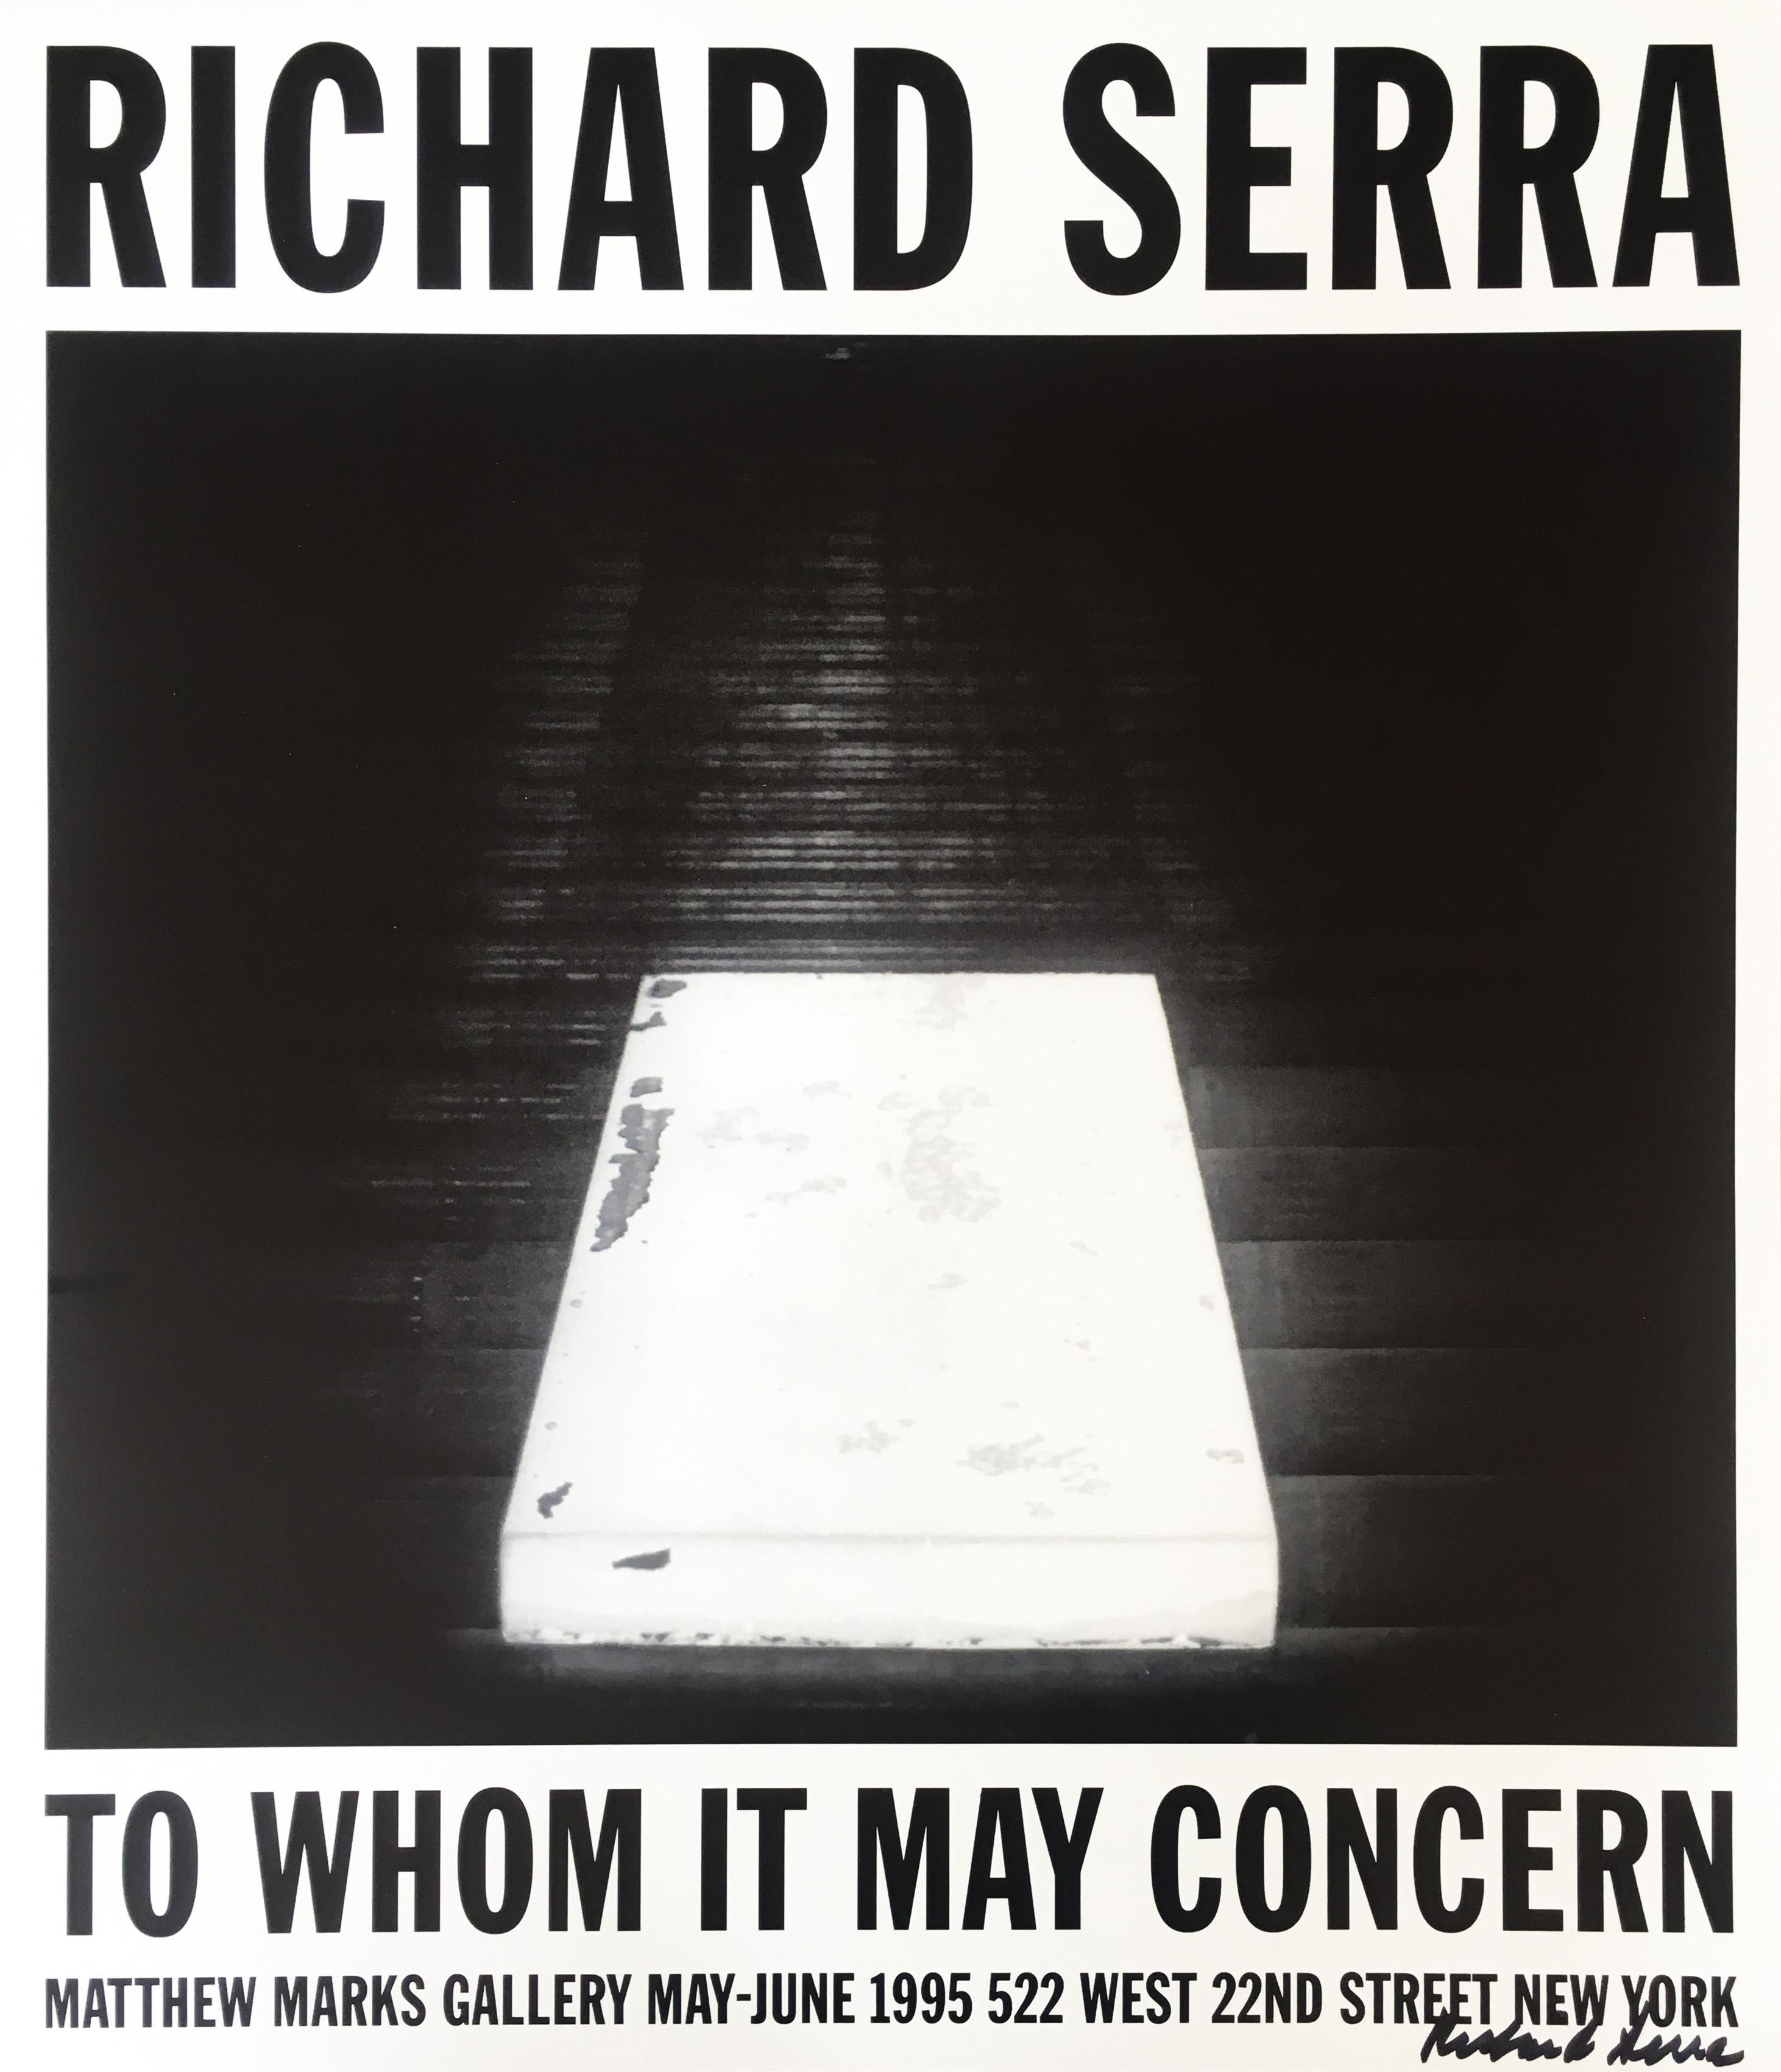 Richard Serra Print - "To Whom It May Concern"